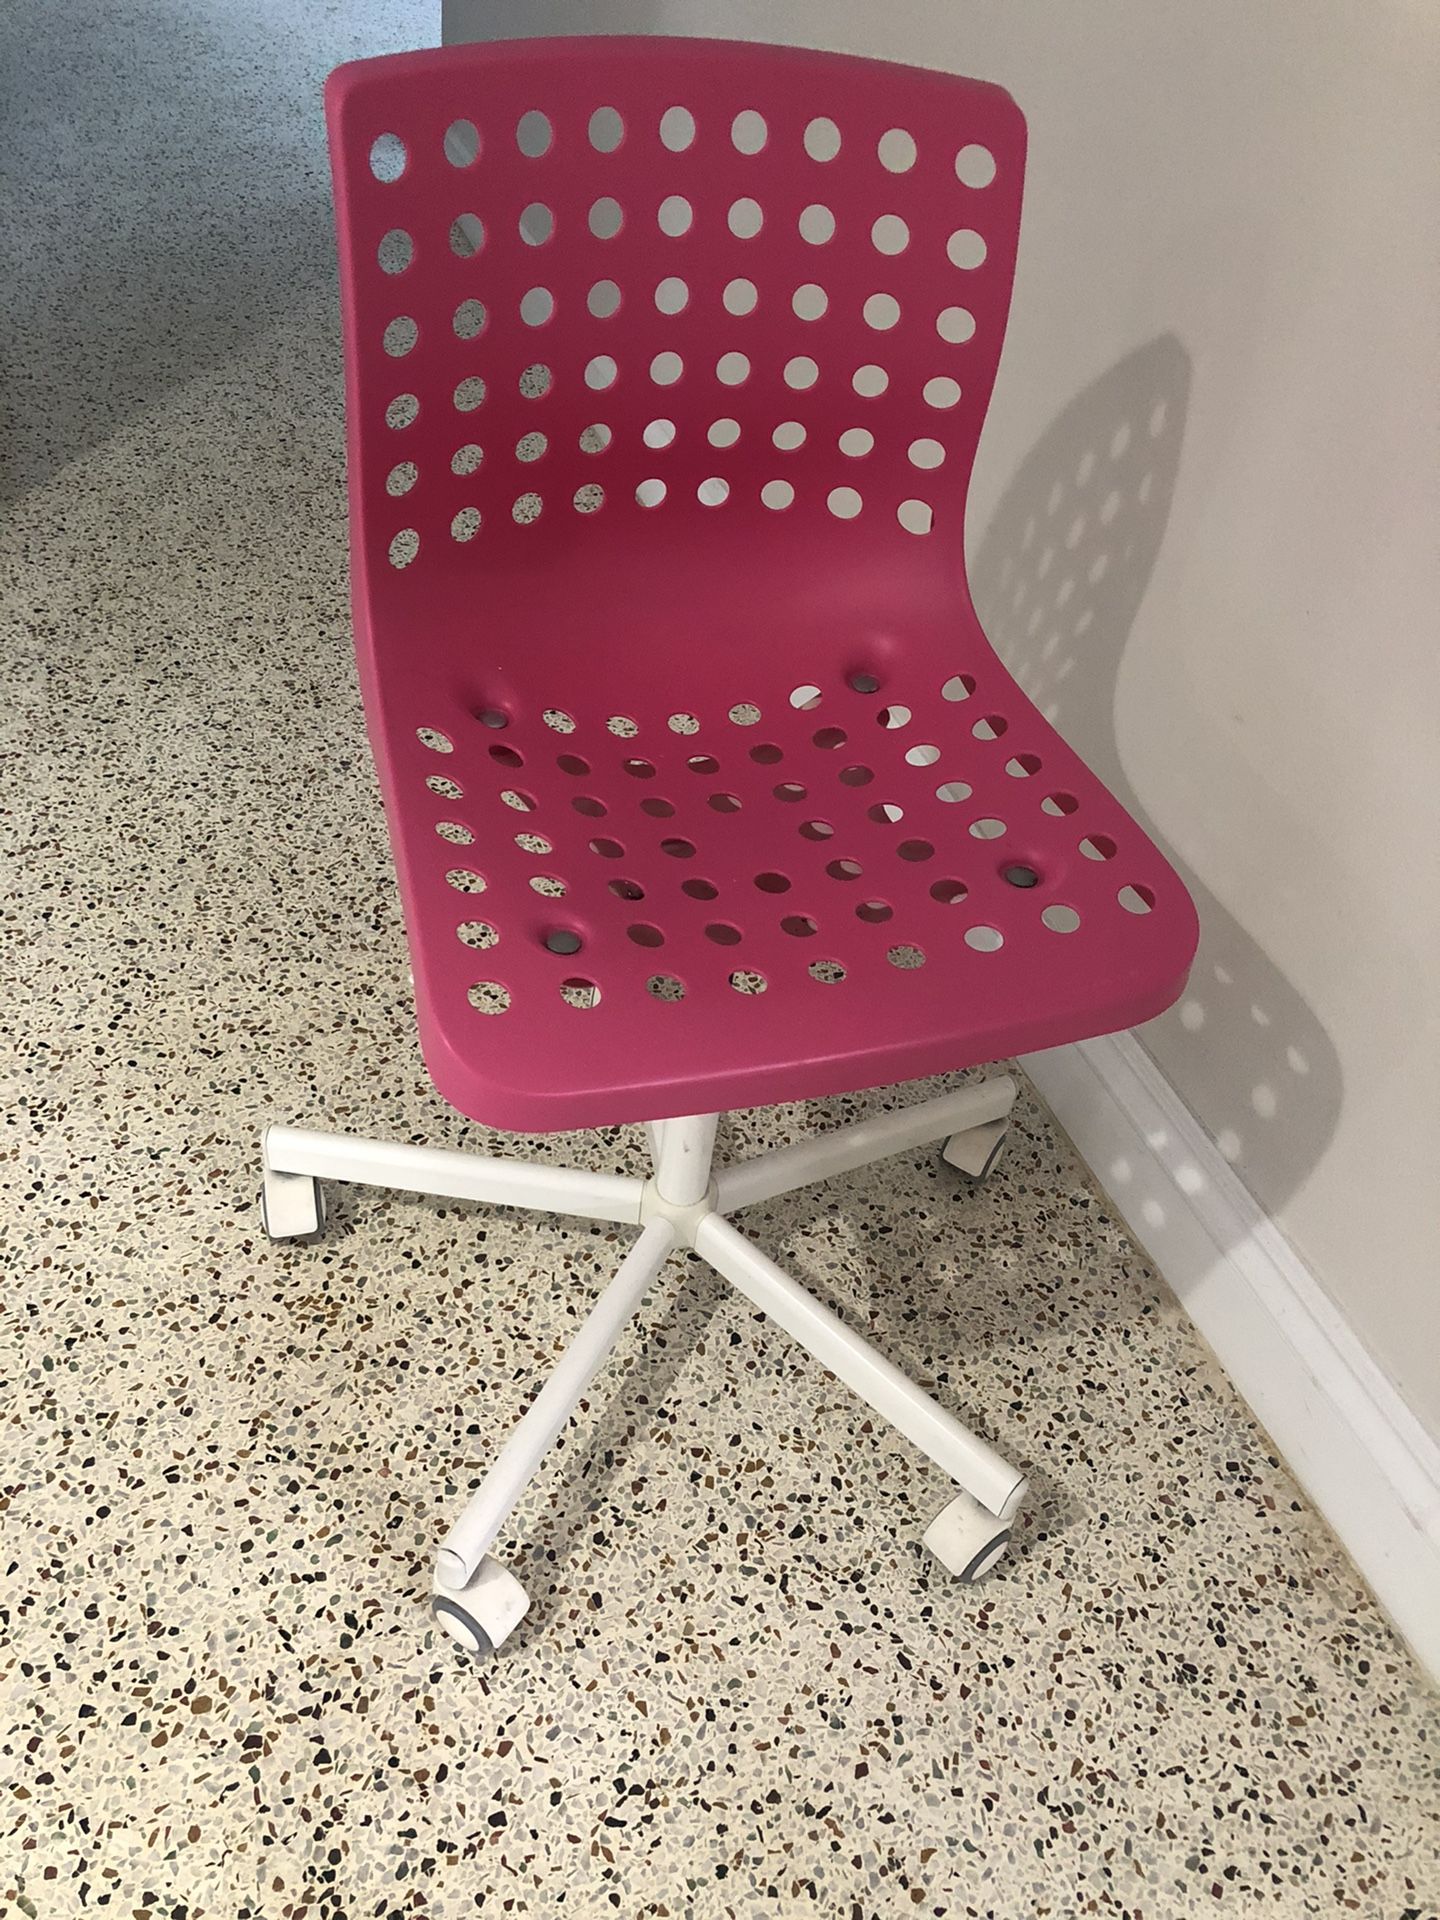 Pink IKEA desk chair